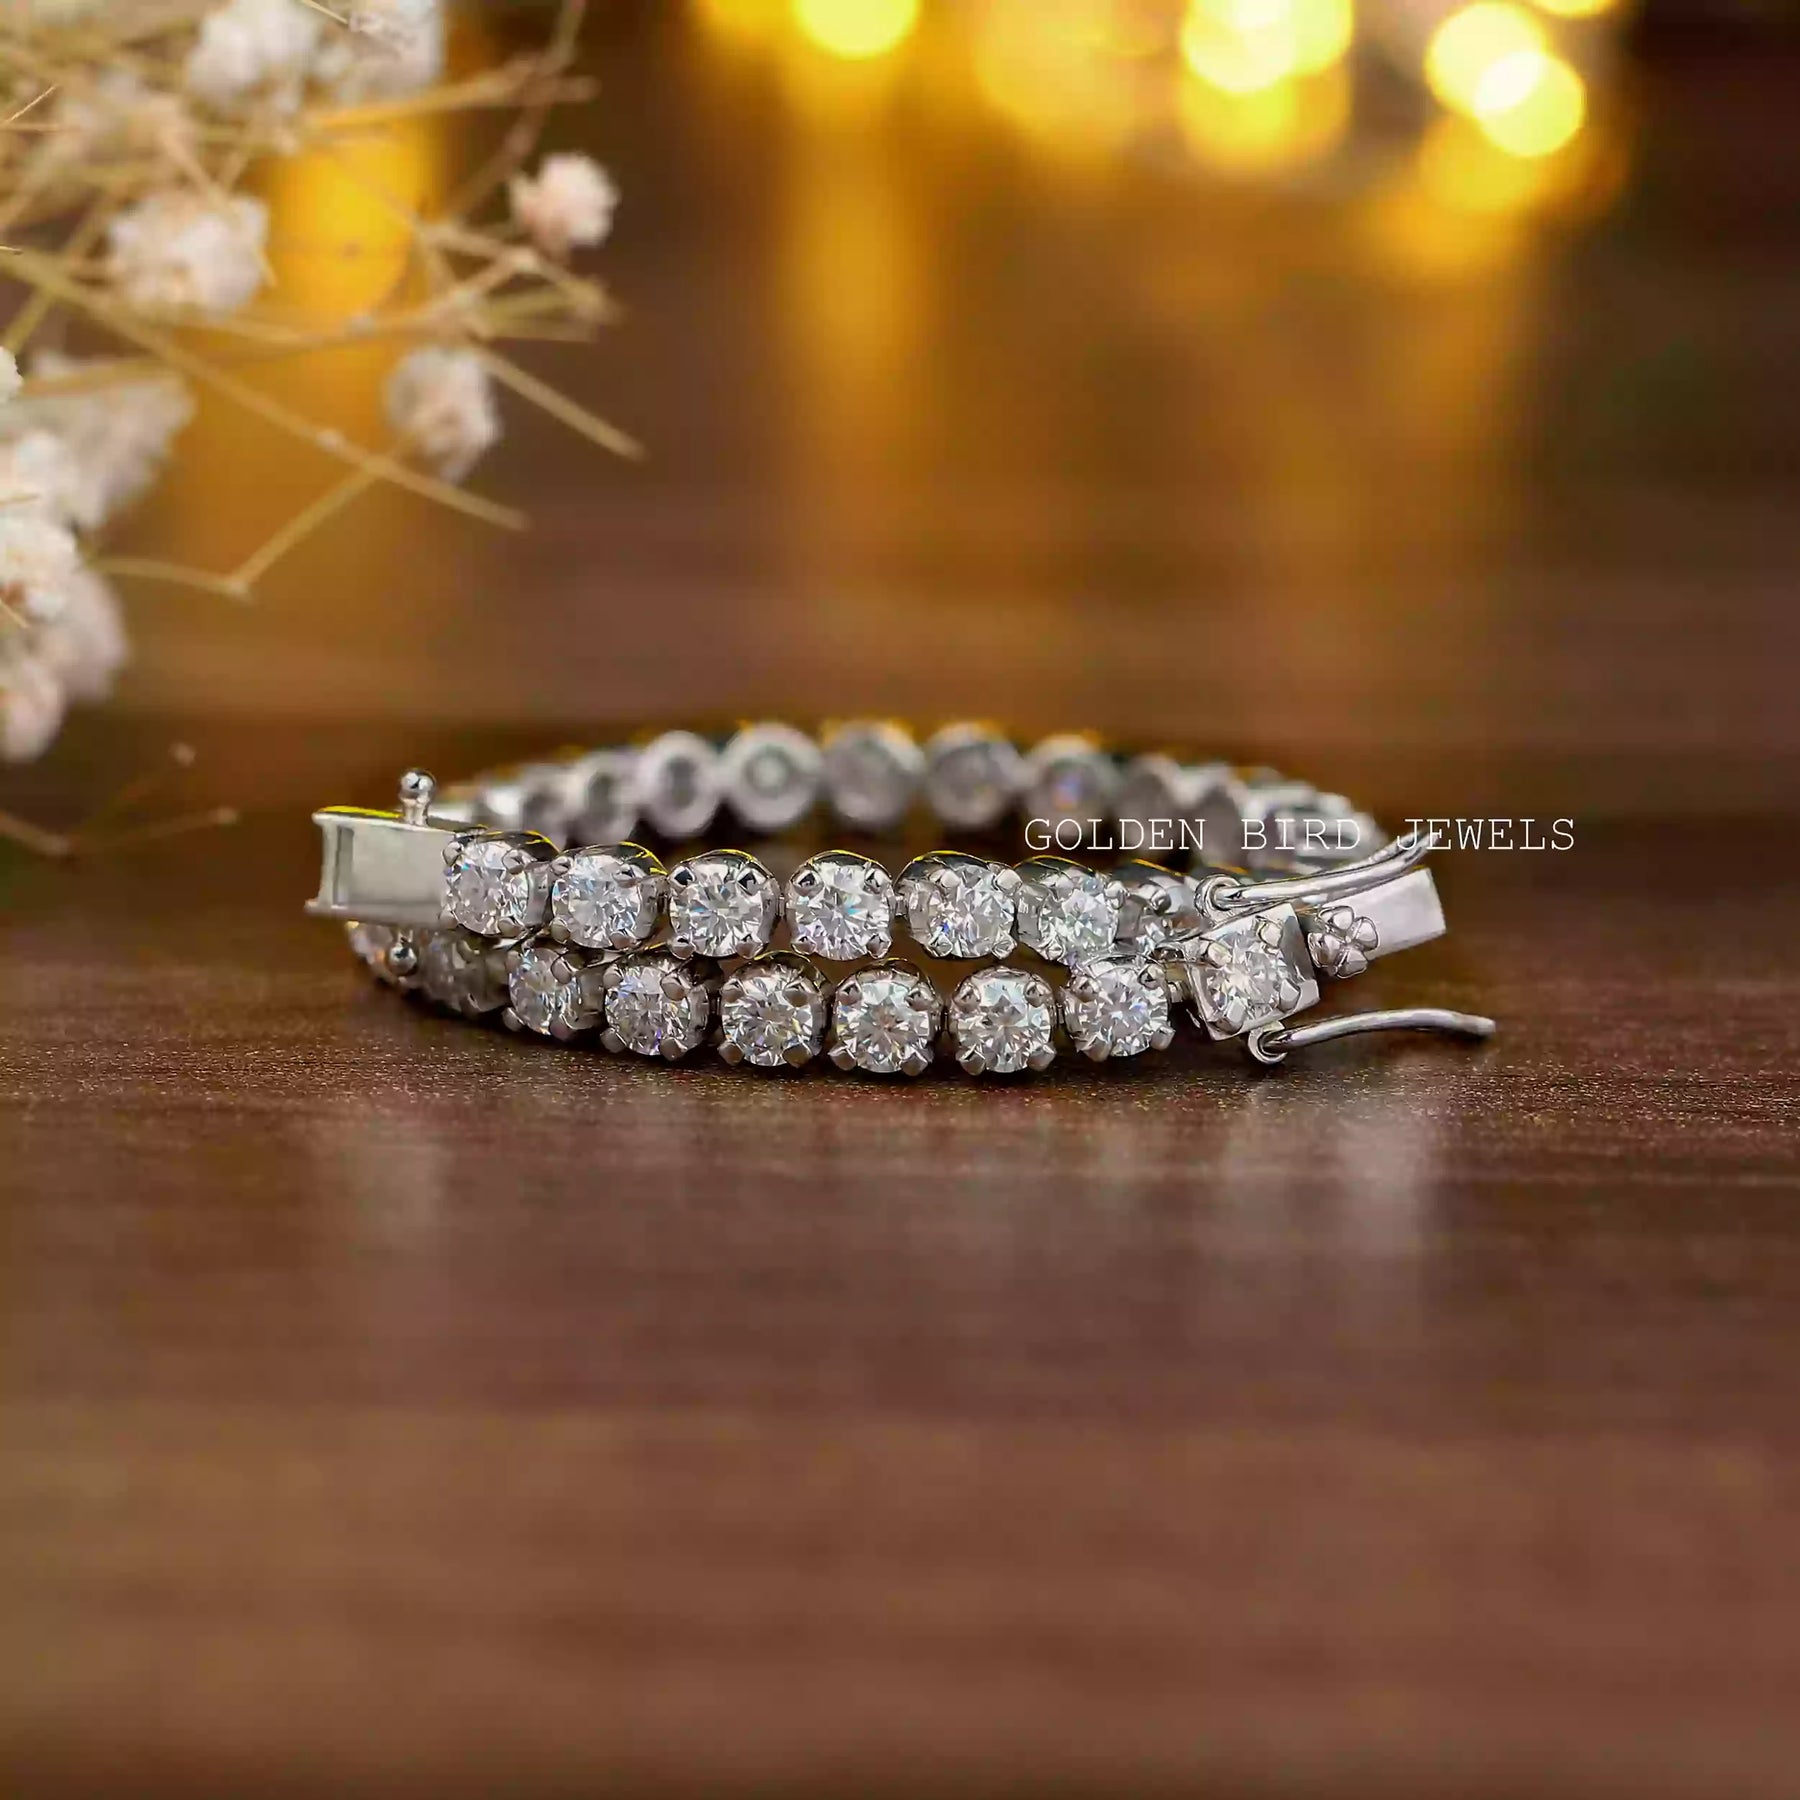 [This round cut moissanite bracelet made 14k white gold]-[Golden Bird Jewels]